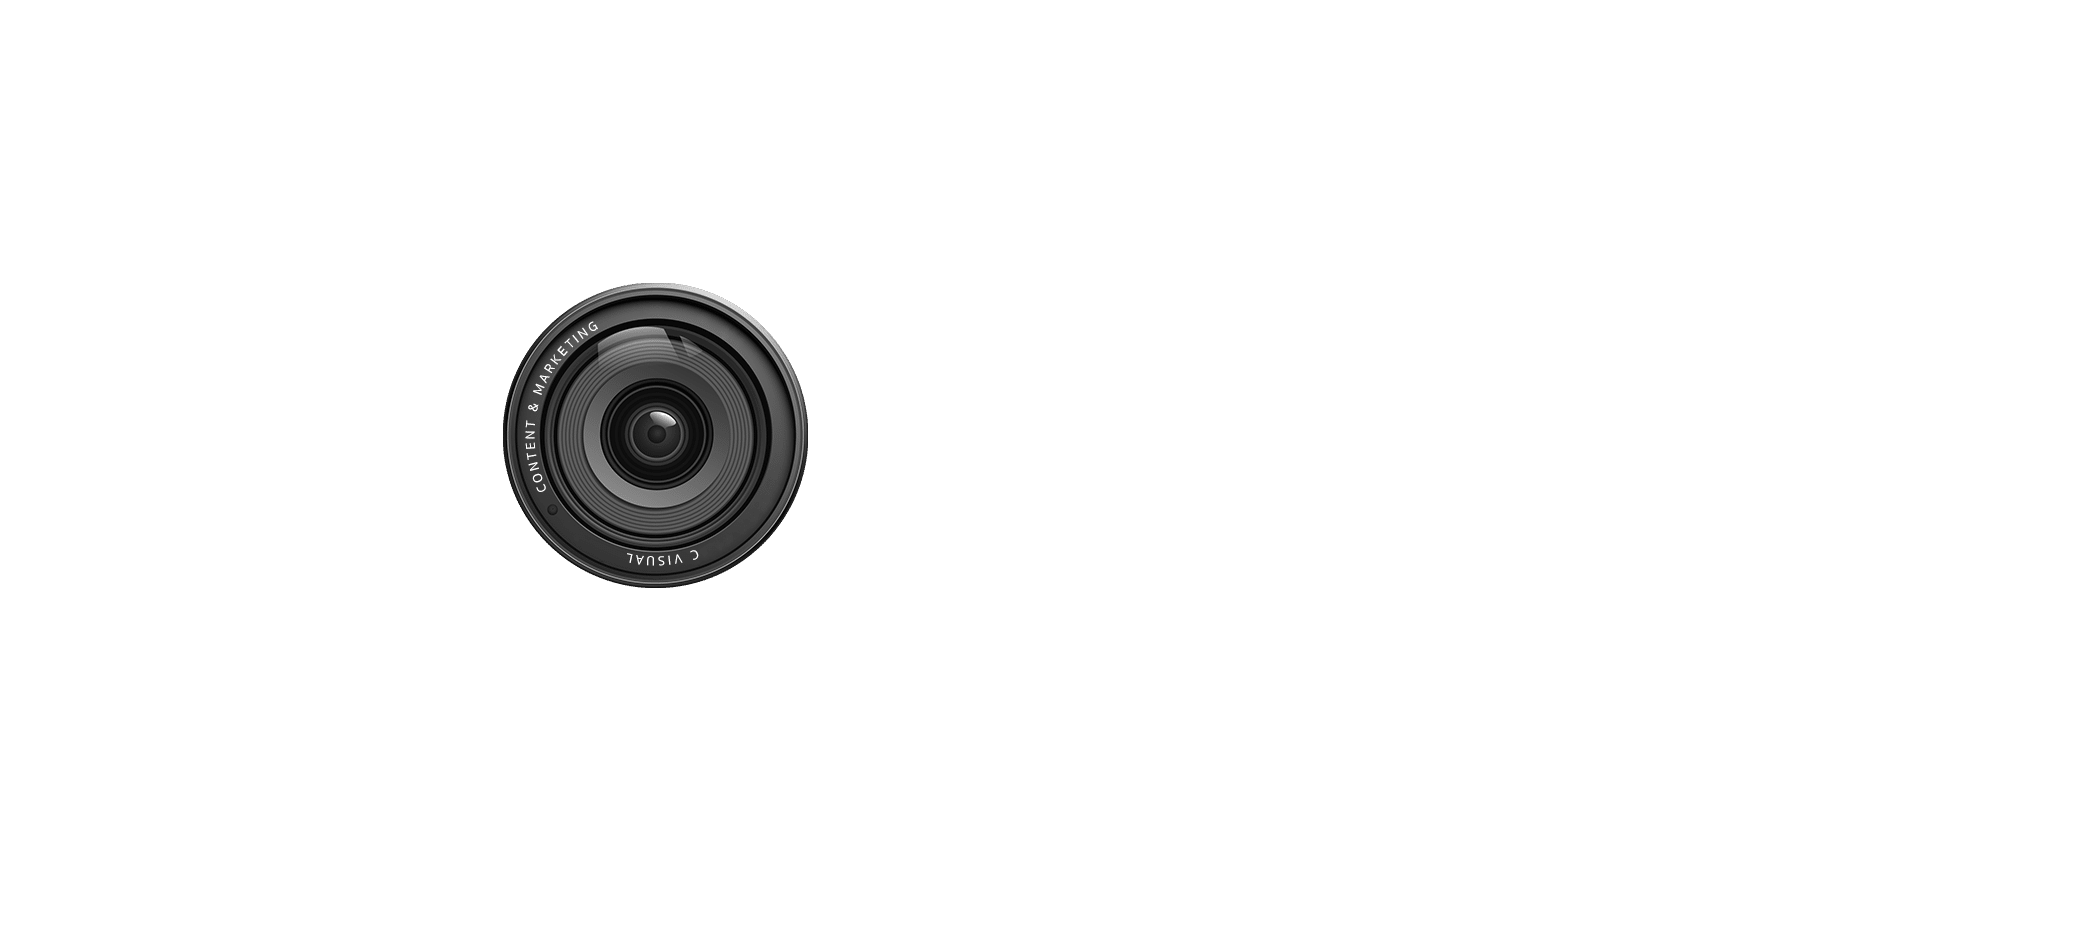 Cvisual Content & Marketing